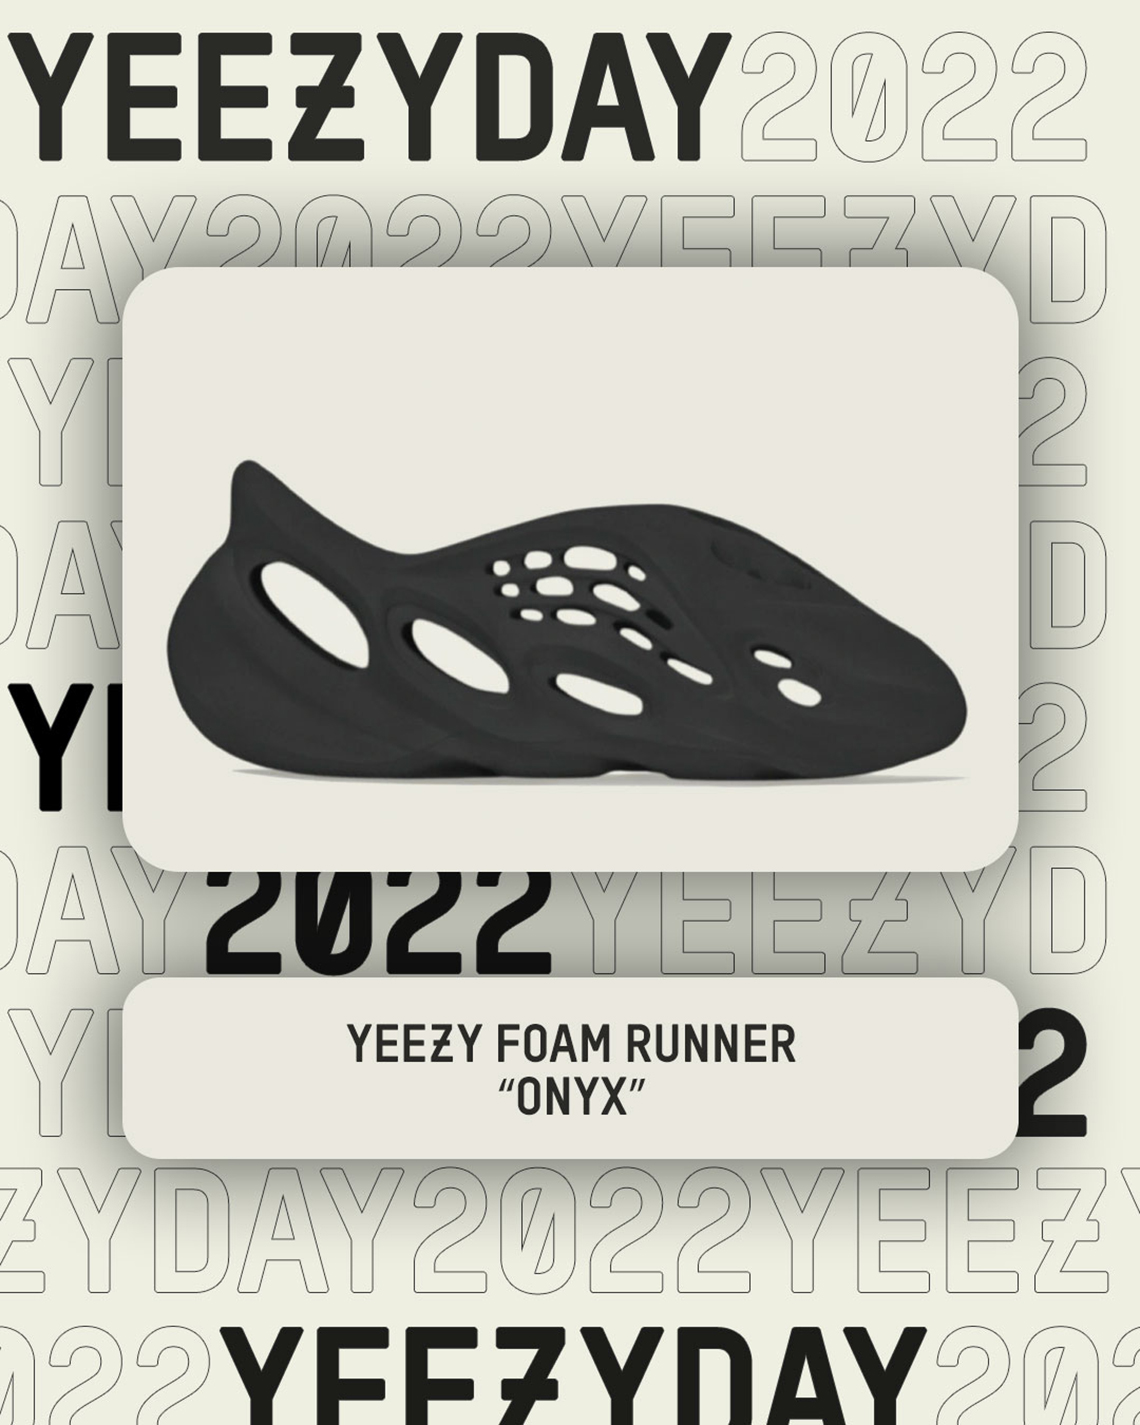 Yeezy Day 2022 Yeezy Foam Runner Onyx 1